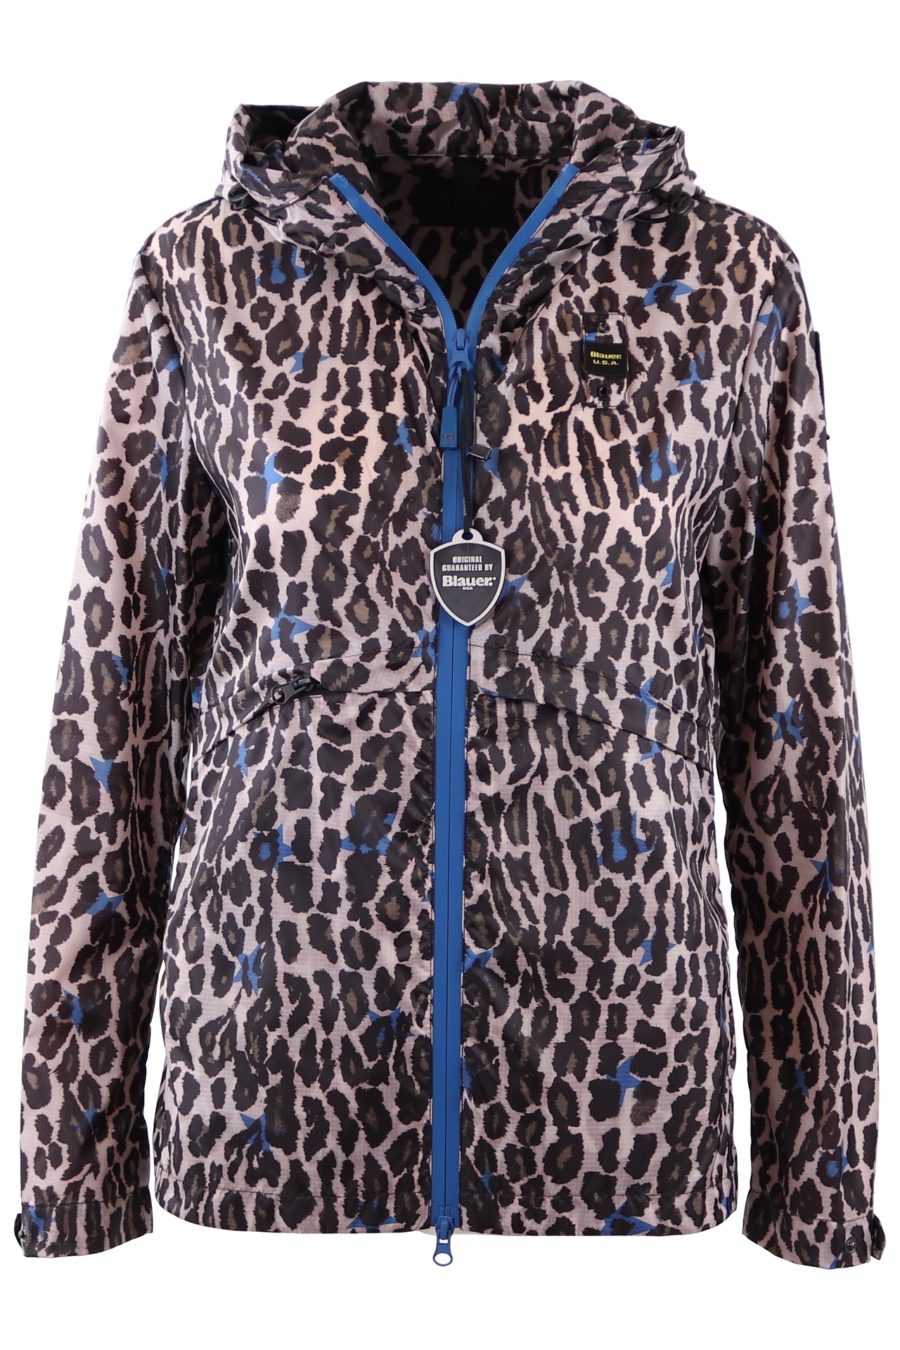 Leopard print jacket Blauer - a3046a89d1f794949eac38dcb11529dc0c76cb5554